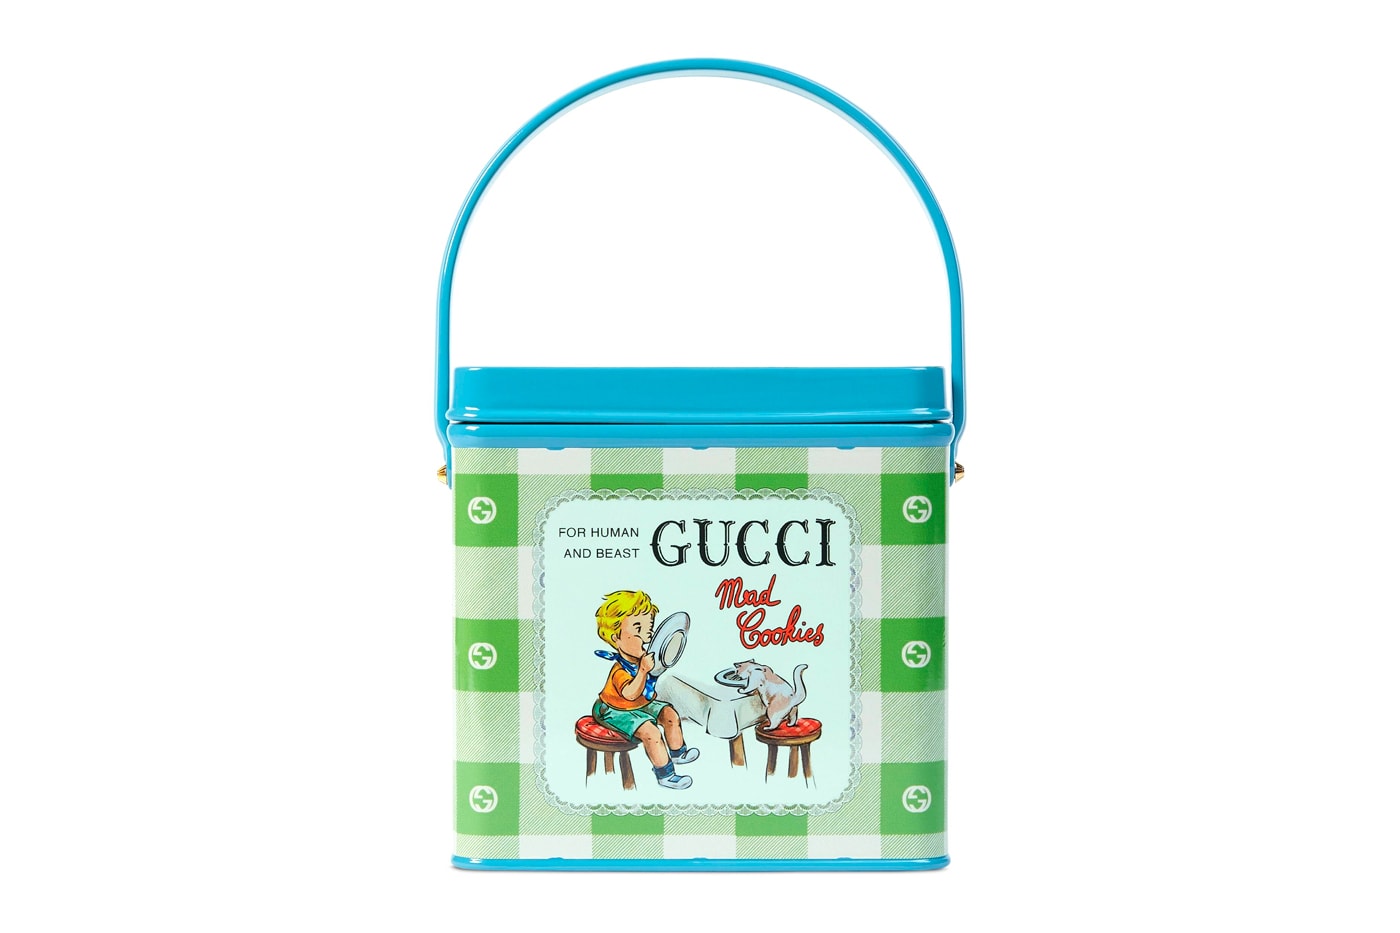 Gucci bag  Gucci bag, Bags, Lunch box